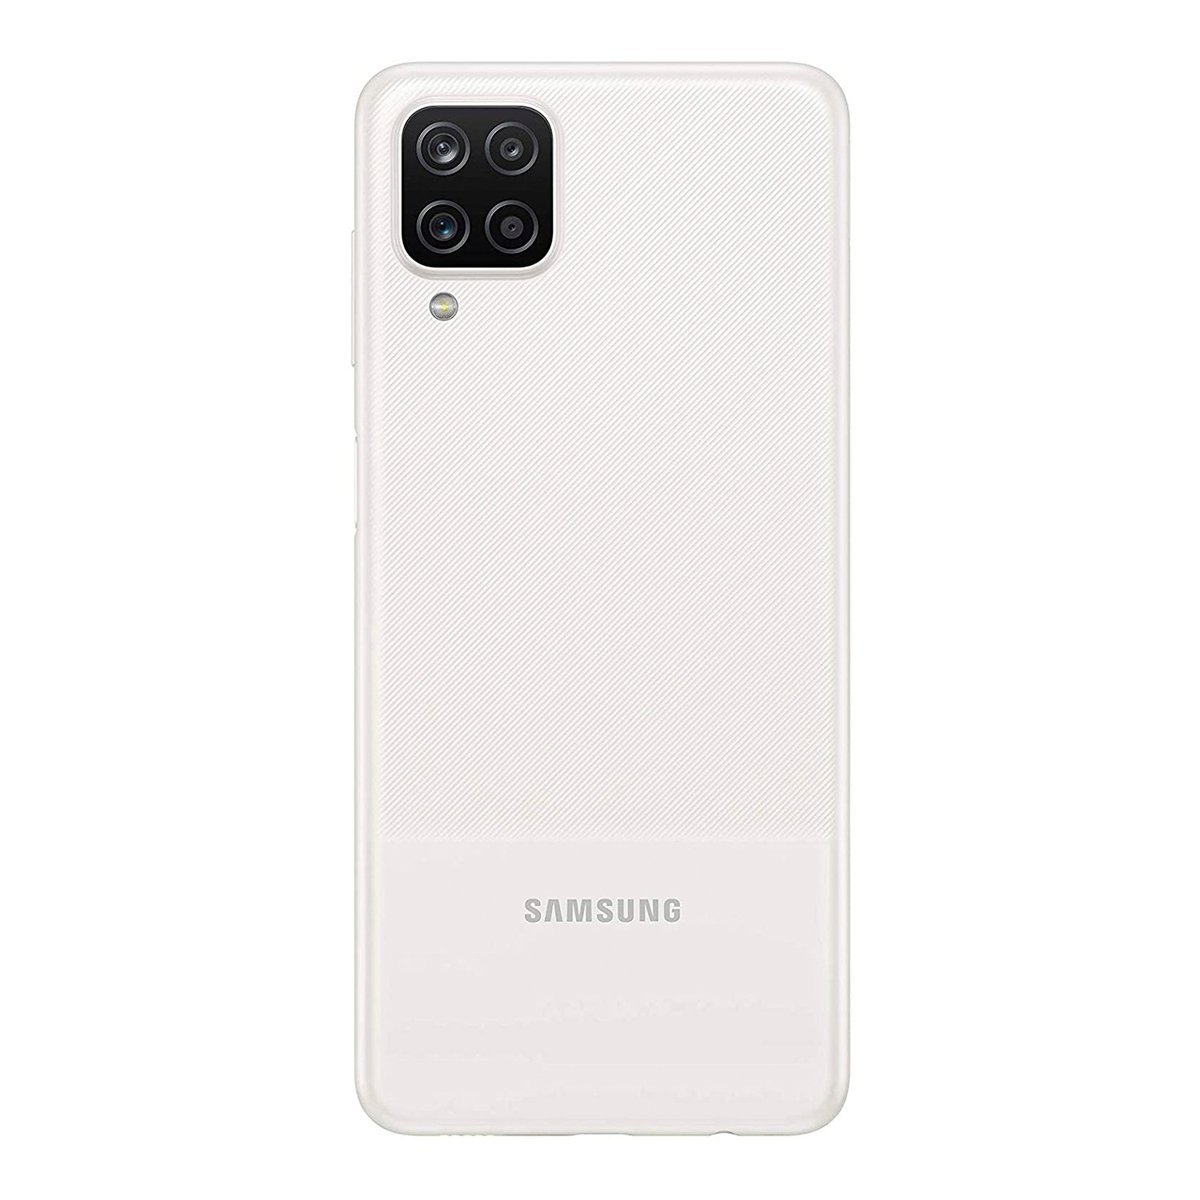 Samsung Galaxy-A12-SMA125FZ 64GB White